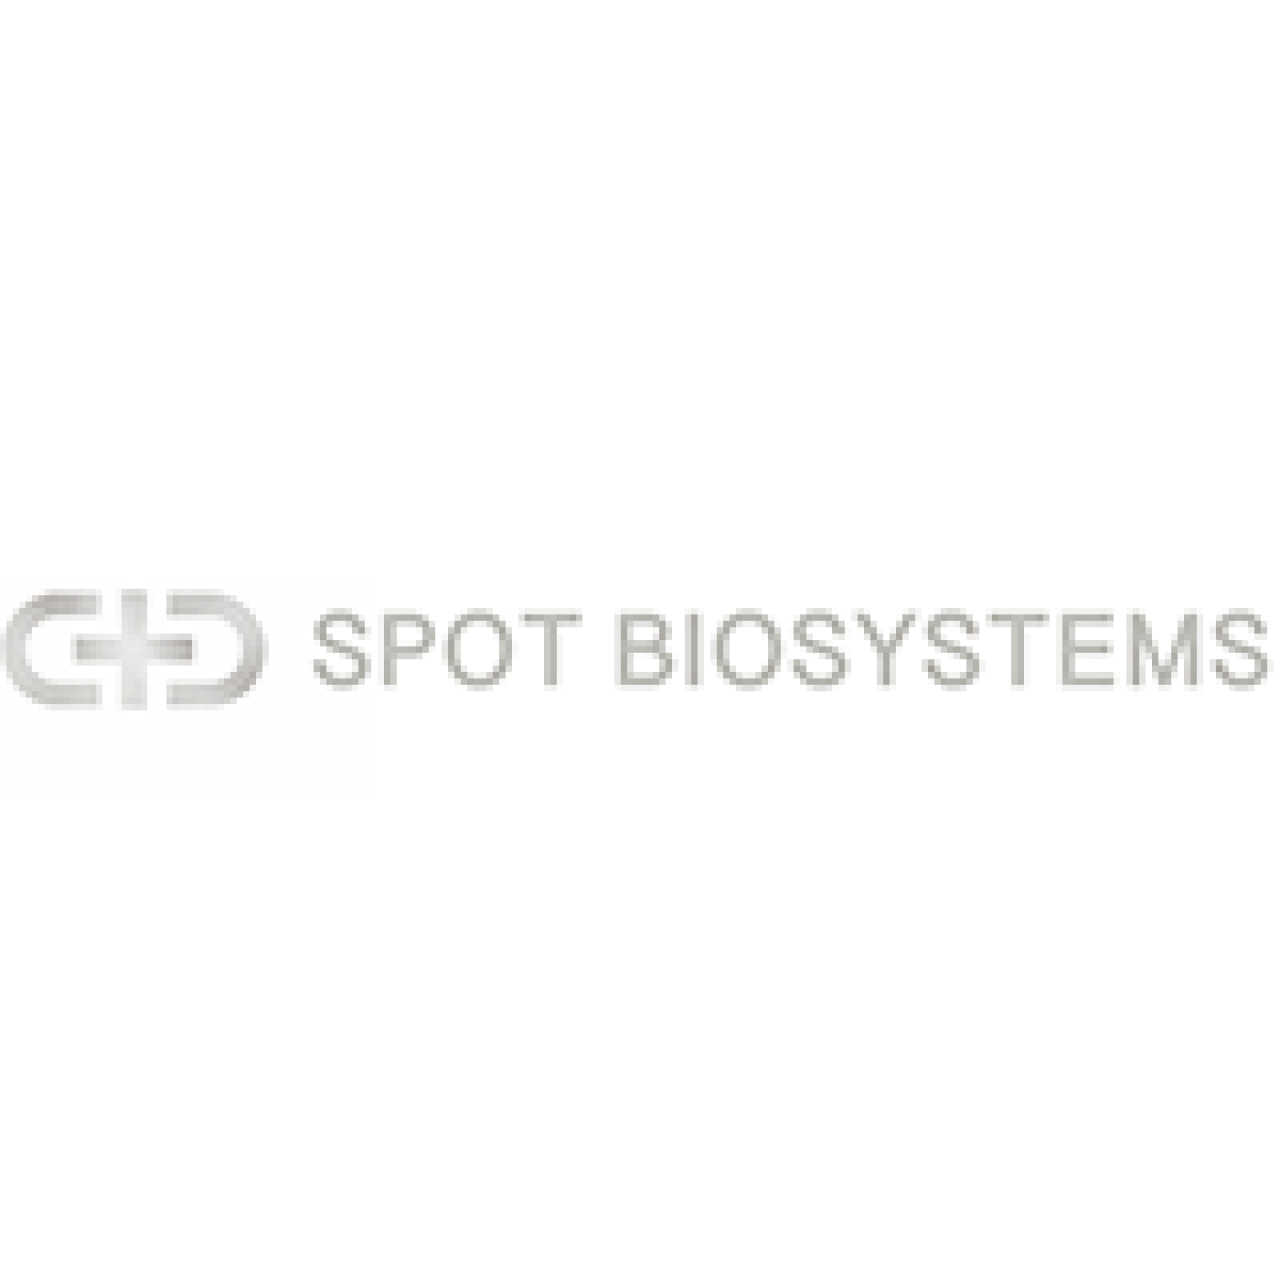 spot biosystems logo